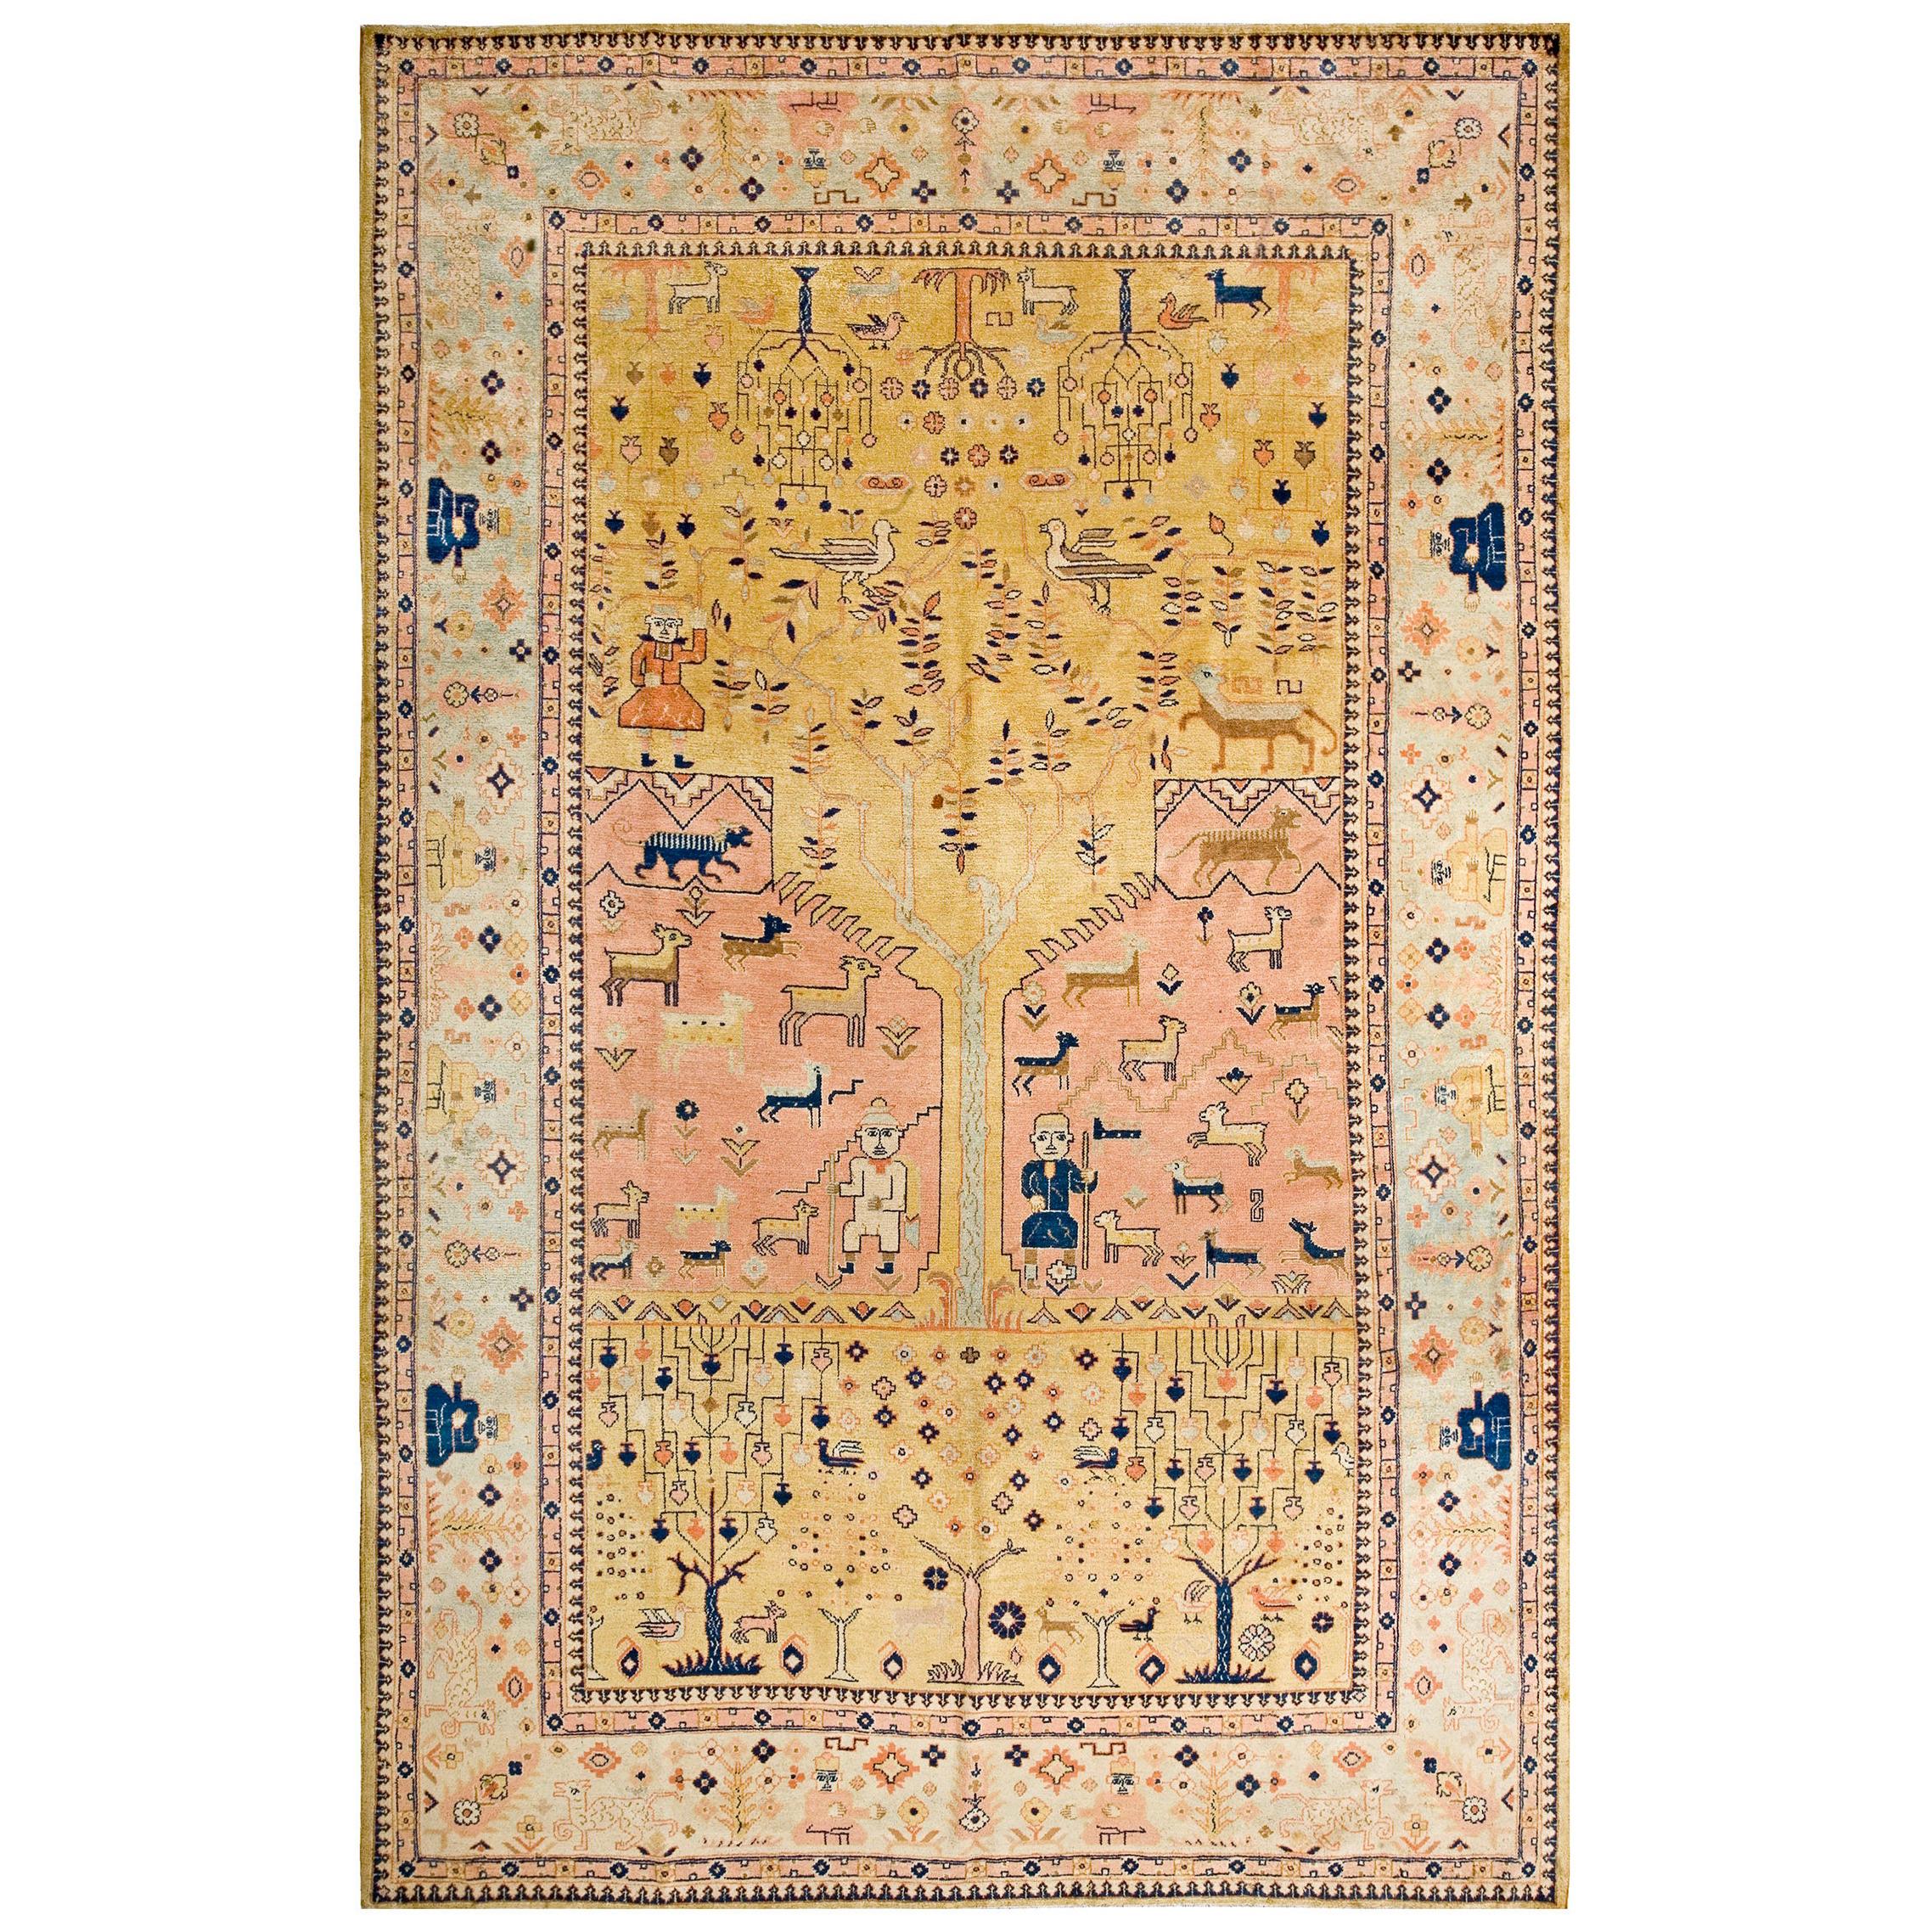 Early 20th Century West Persian Senneh Carpet ( 6'9" x 10'10" - 205 x 330 cm )